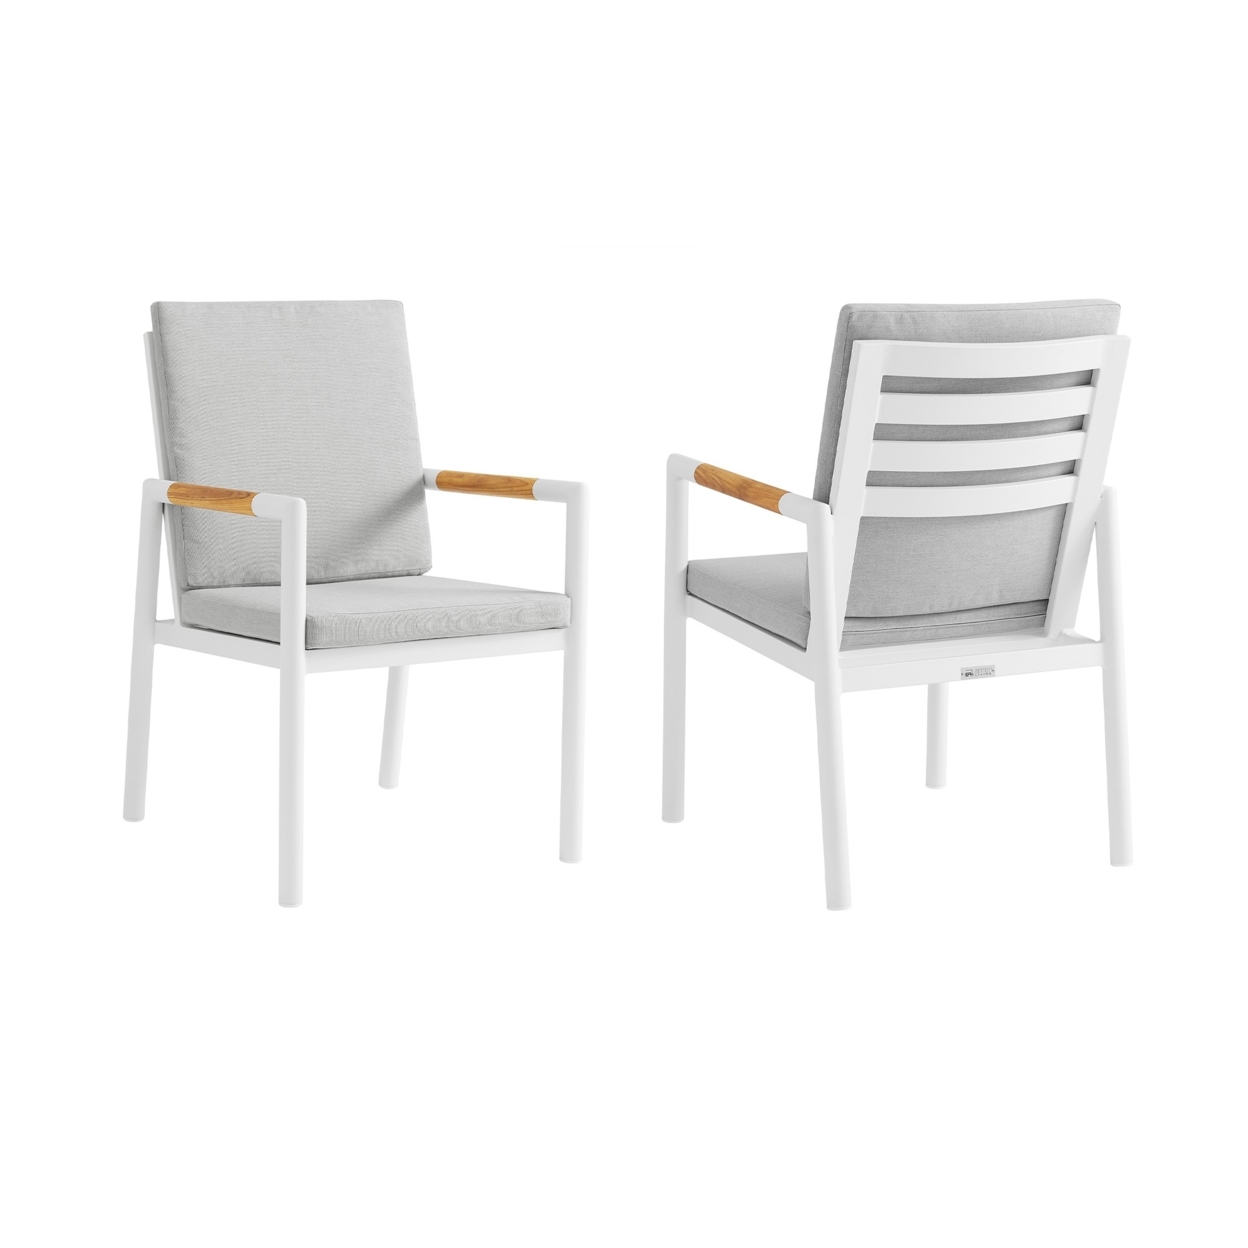 Dex 23 Inch Outdoor Dining Chair Set Of 2, Light Gray Cushions, White Frame- Saltoro Sherpi